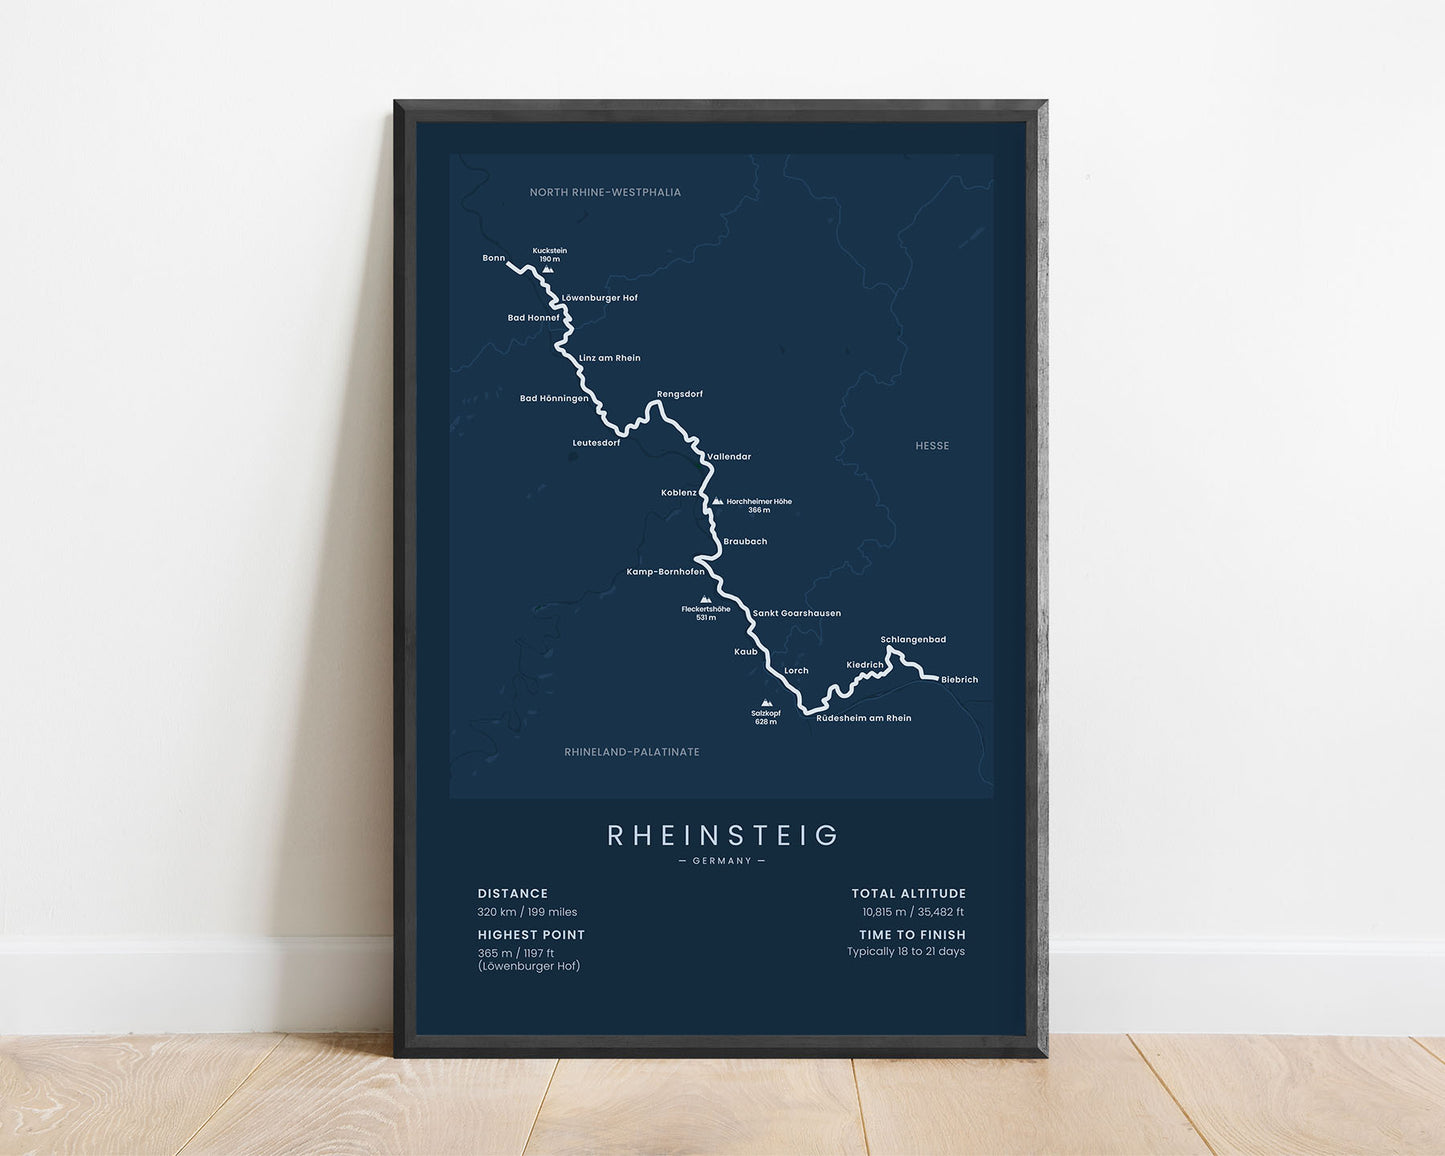 Rheinsteig Trail (Rhineland-Palatinate) route print with blue background